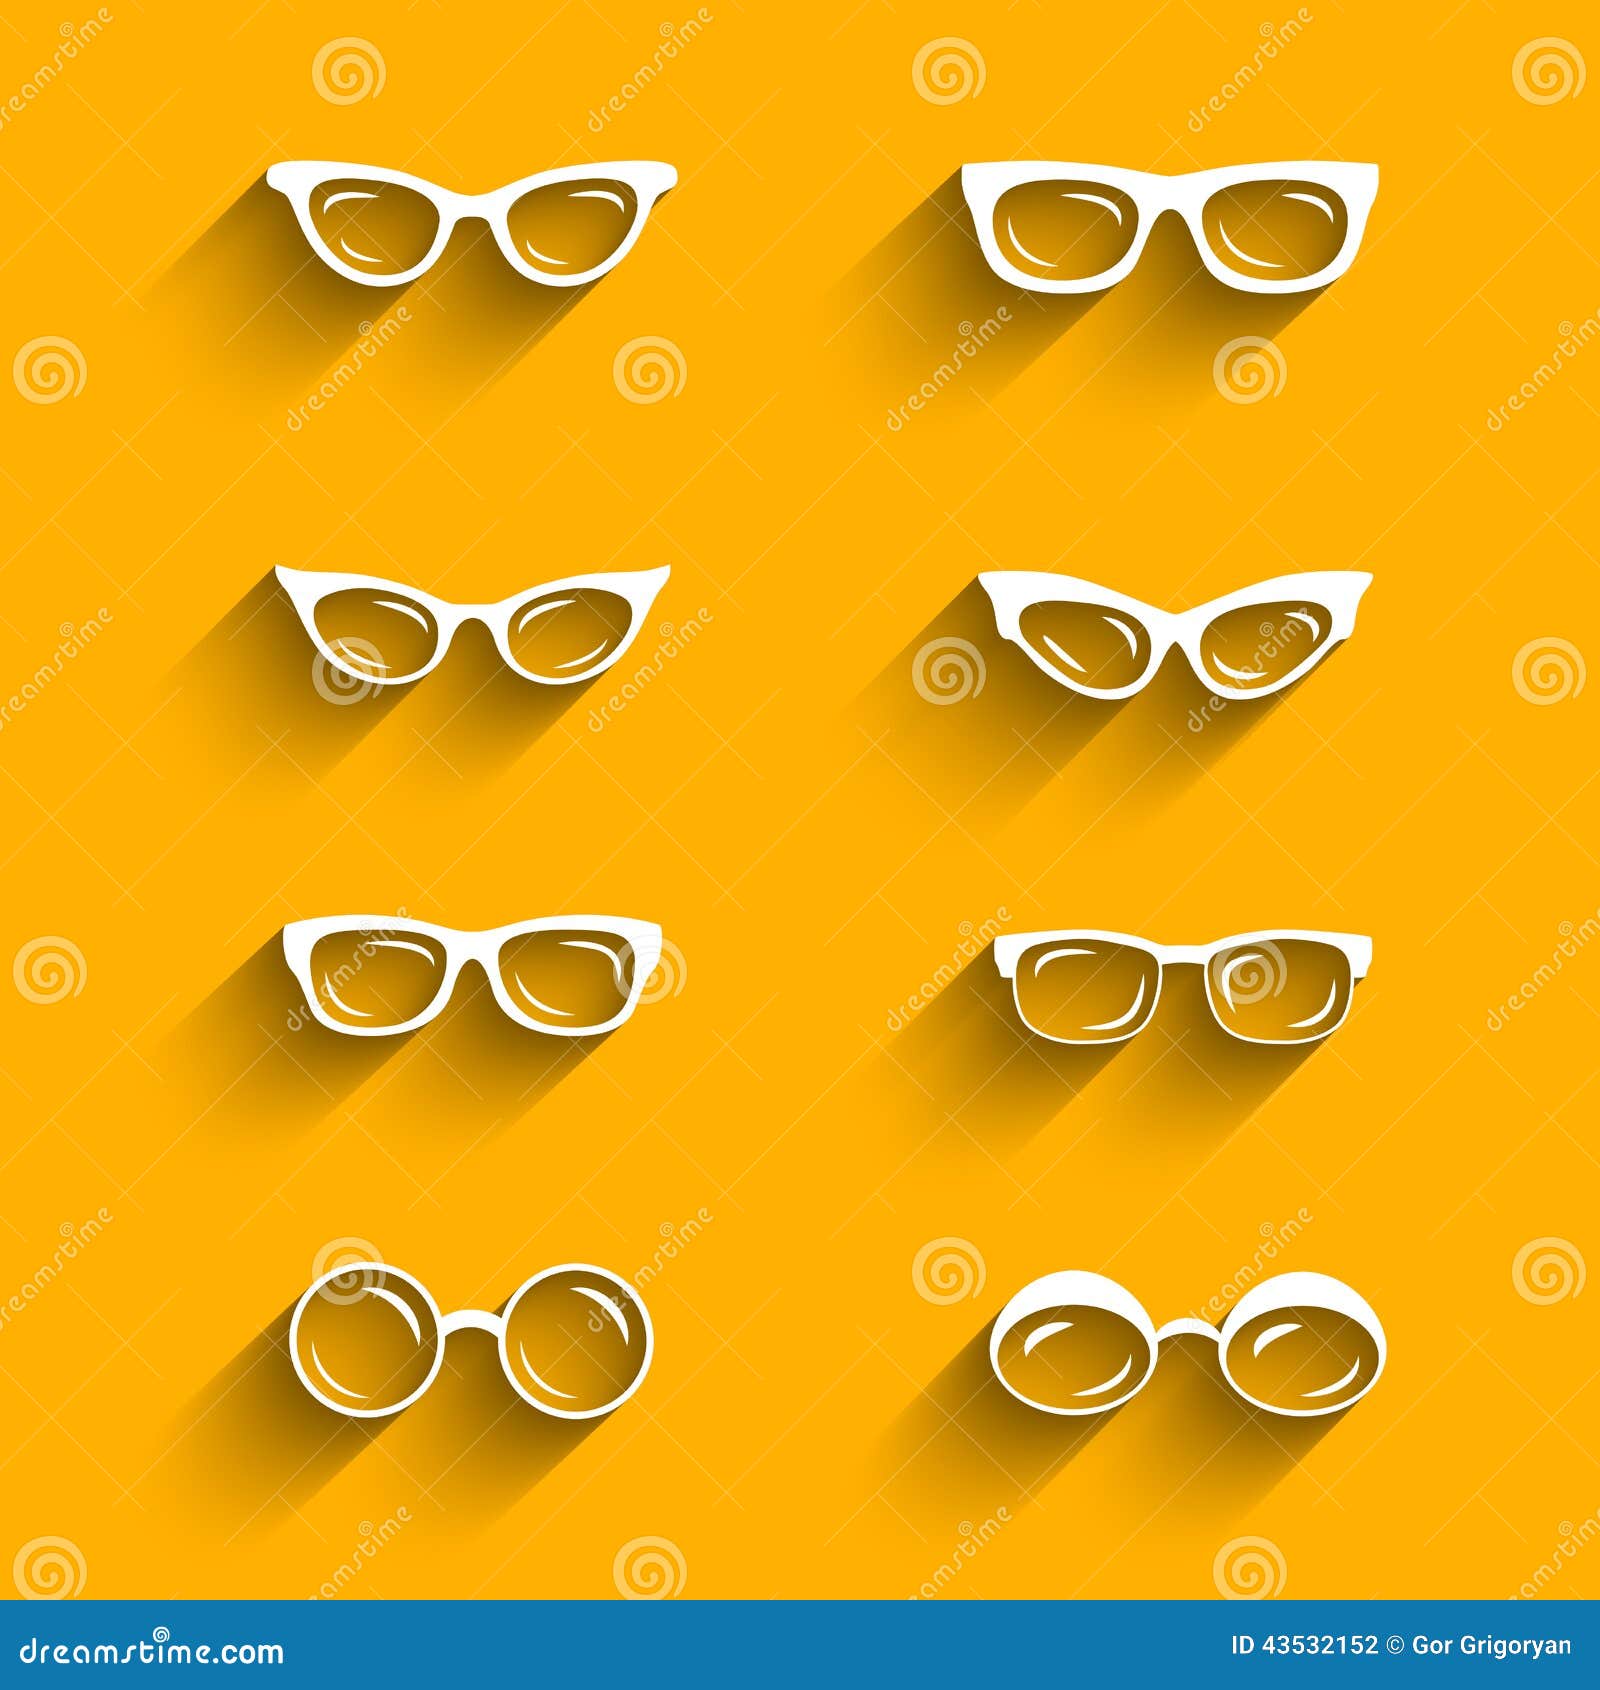 flat  eyeglasses  set with shadows